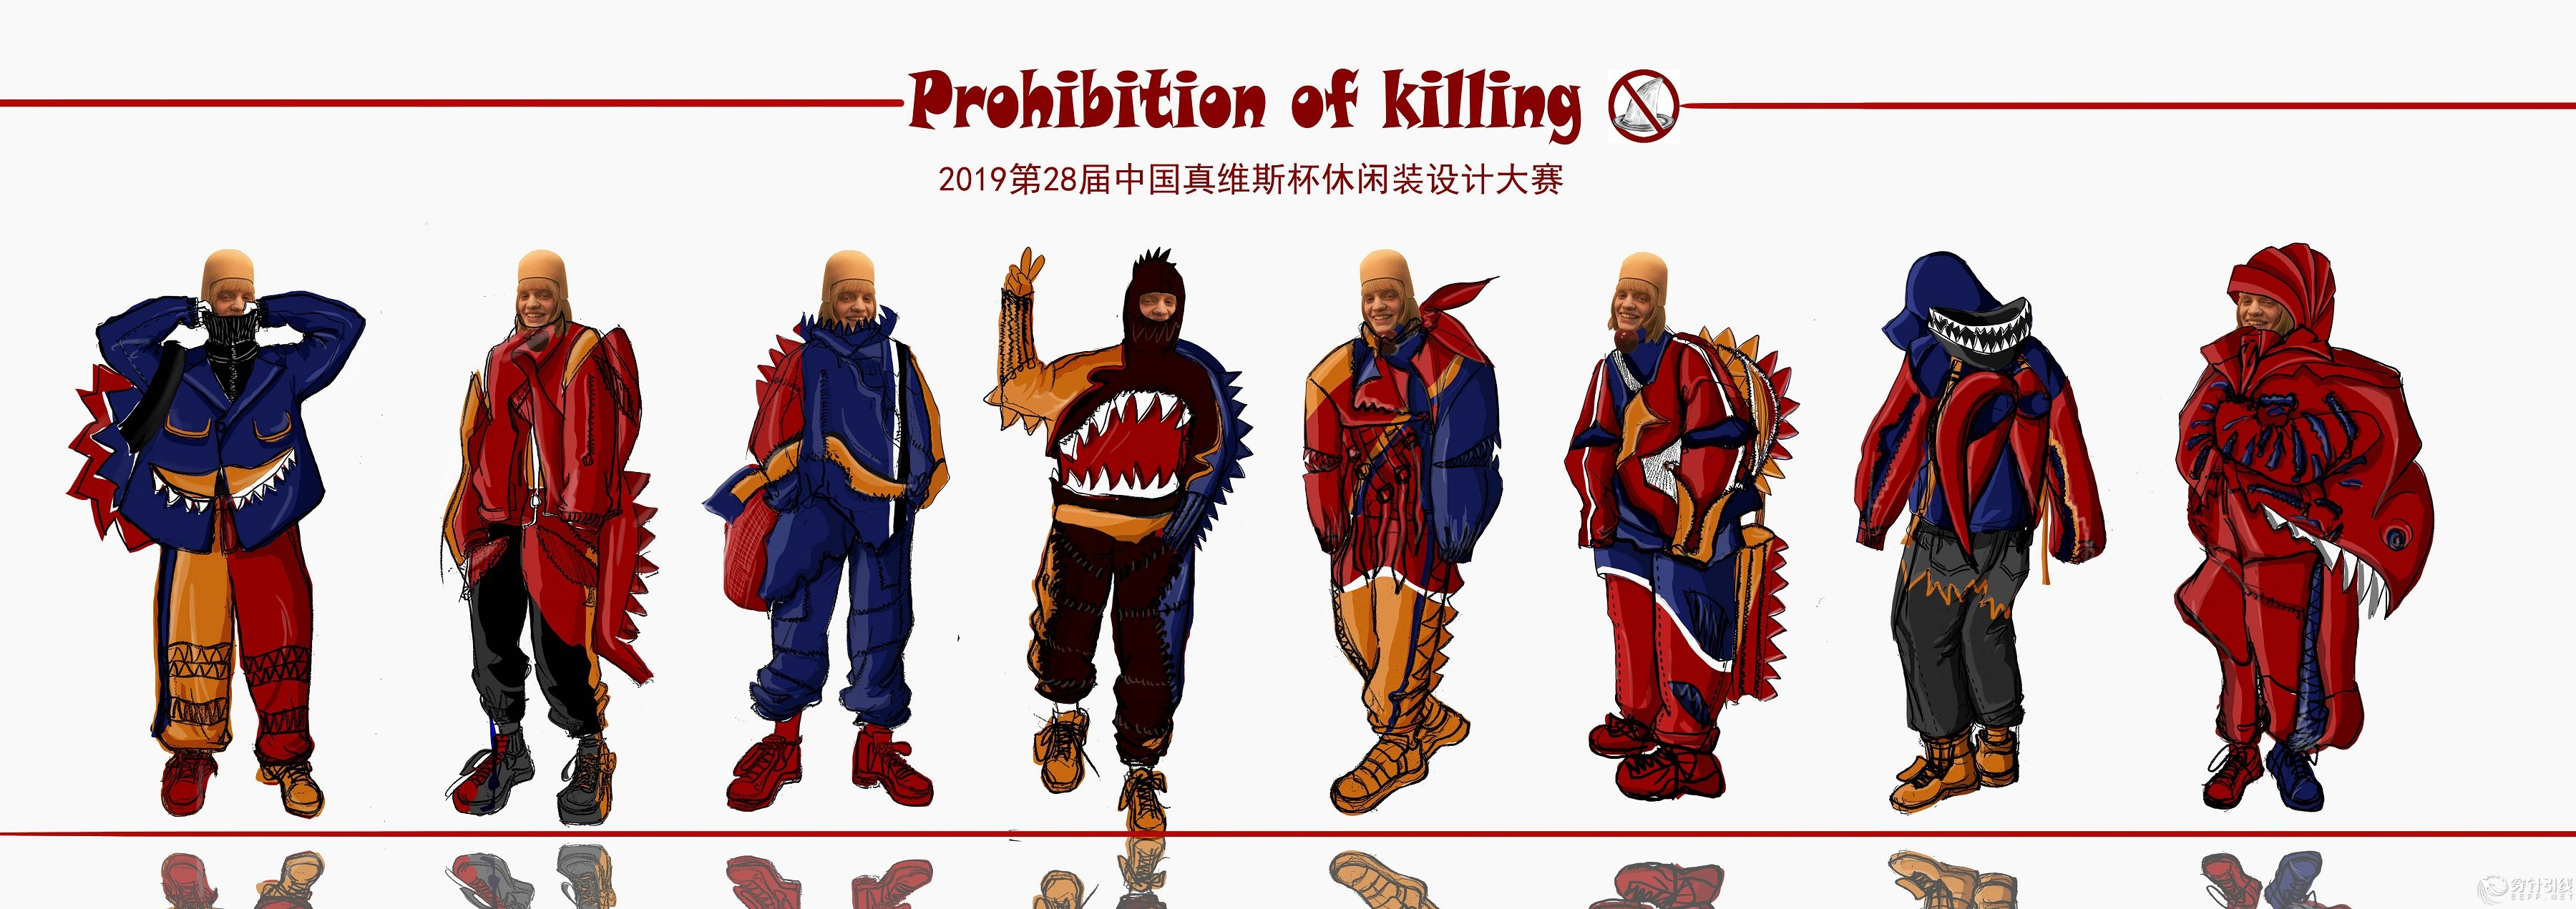 9̴W-Prohibition of Killing.jpg